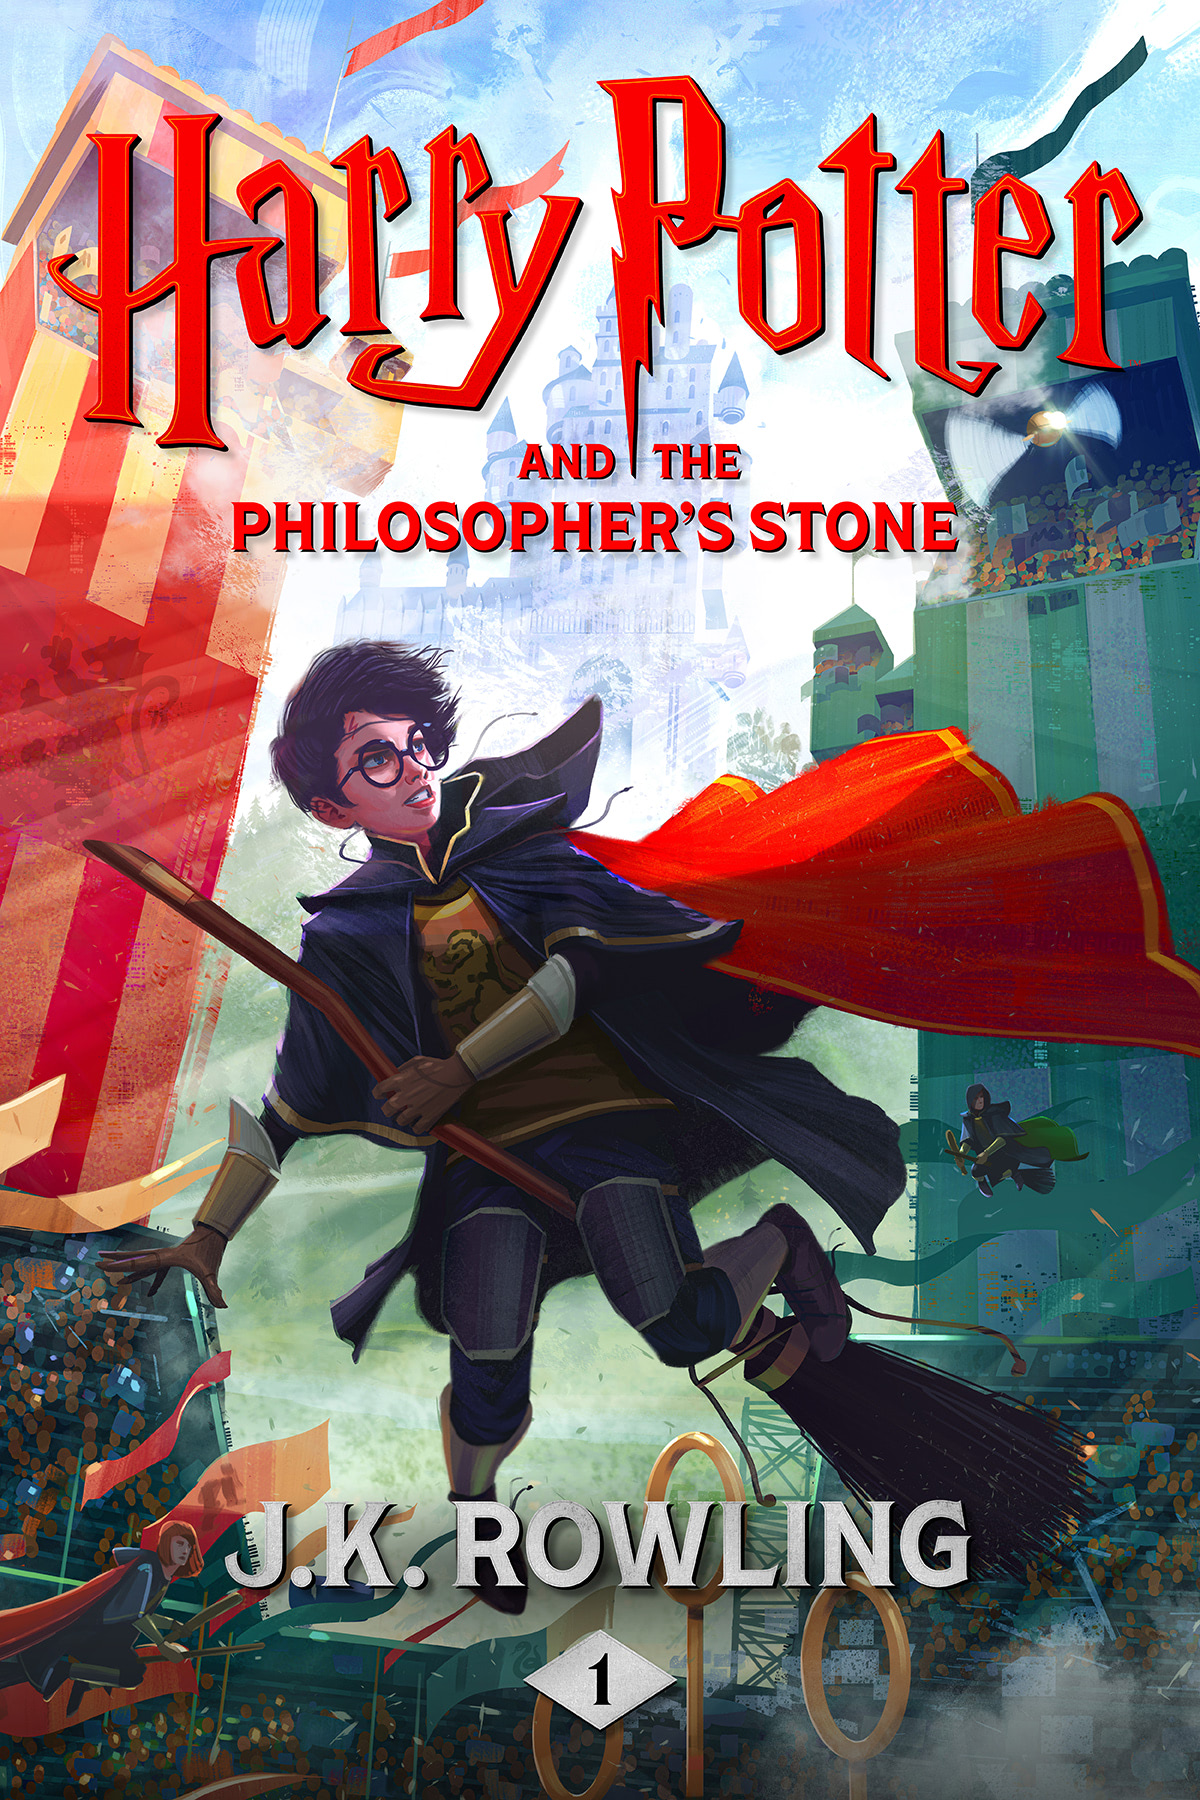 ‘Philosopher’s Stone’ 2022 Pottermore eBook/audiobook cover